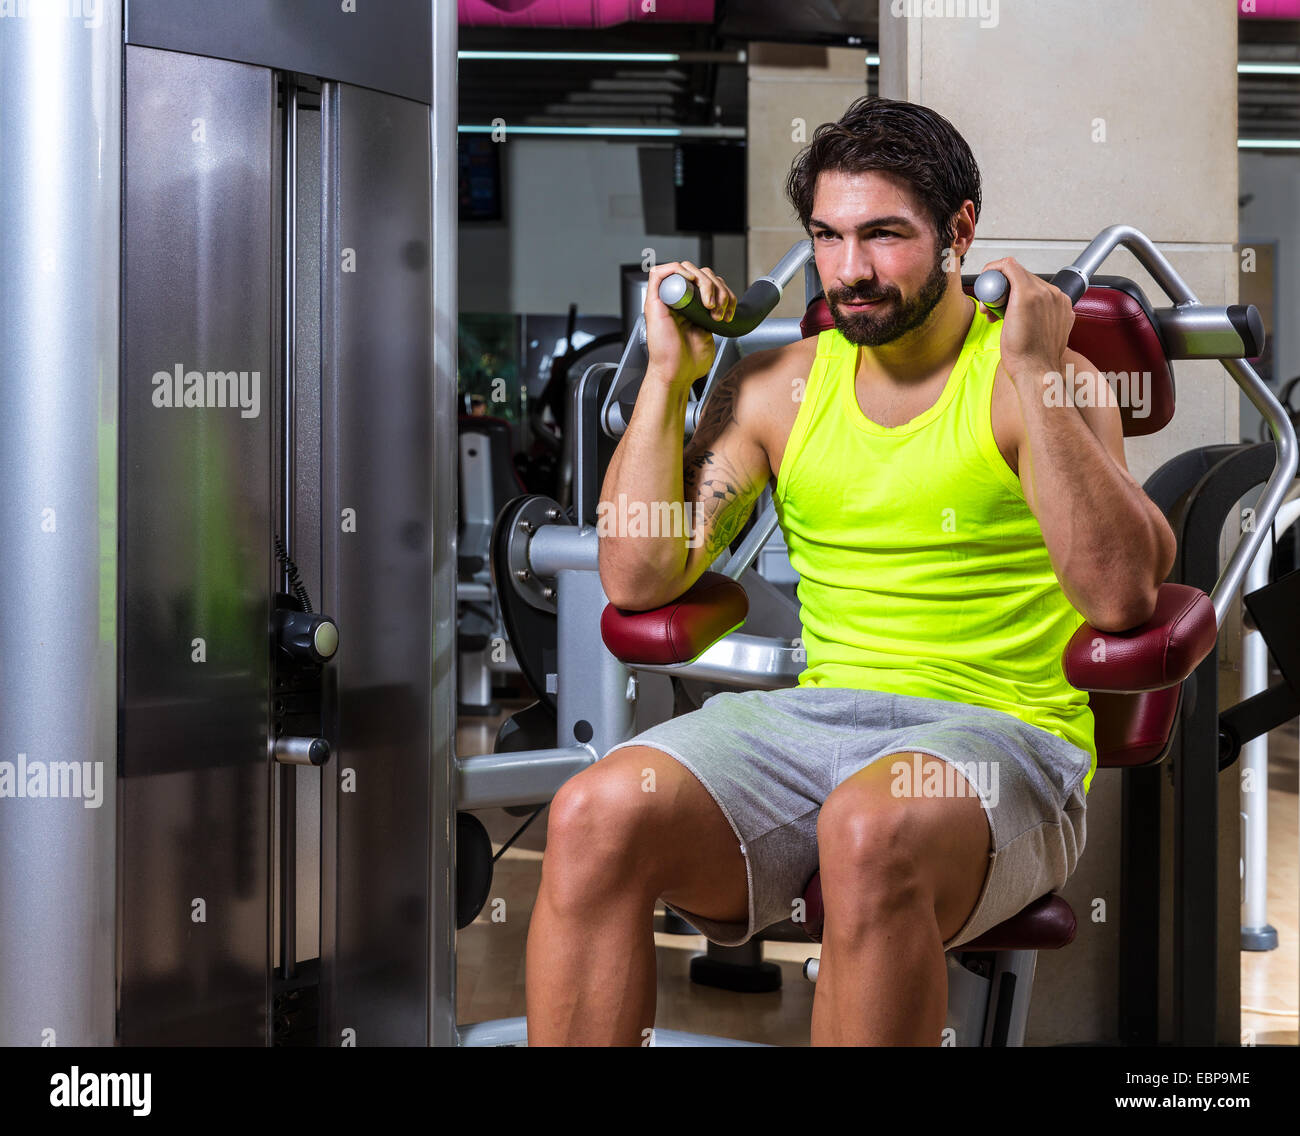 Abdominal crunch machine workout man sit at gym Stock Photo - Alamy